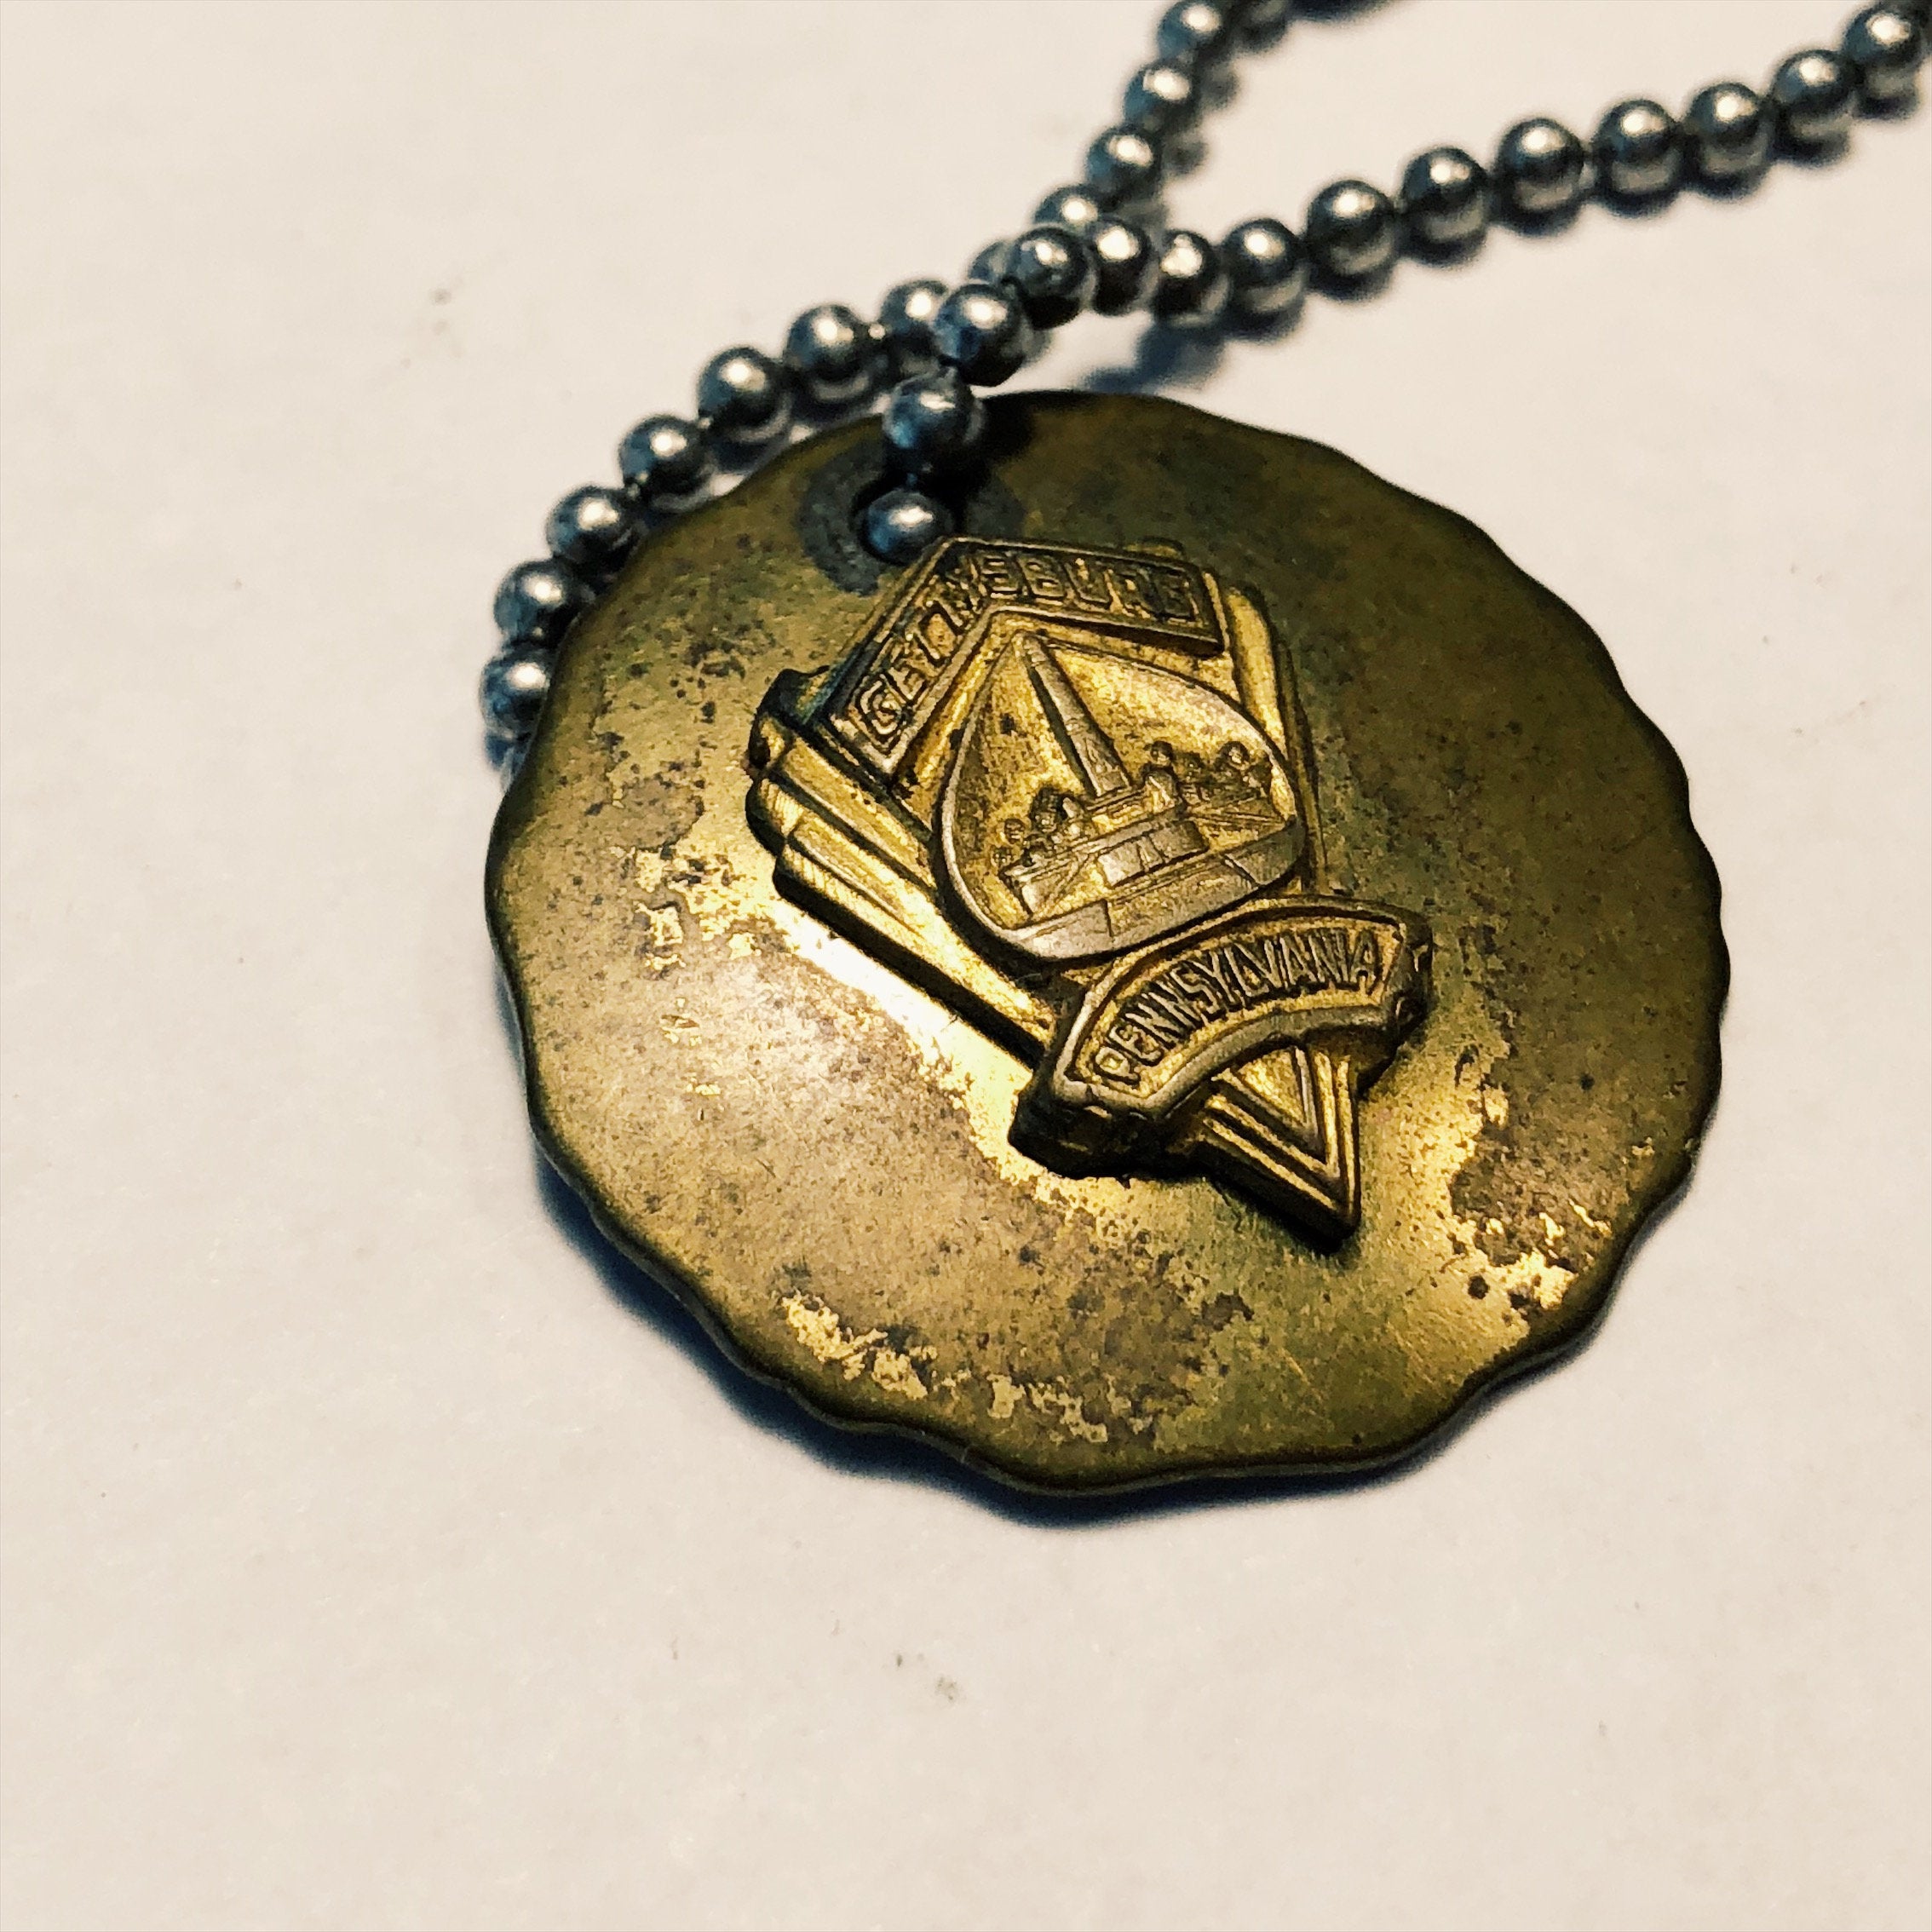 Antique Brass Gettysburg Medallion Pendant - 1930s? - Rare Gettysburg Pendants - Civil War collectibles - Battle of Gettysburg - Union